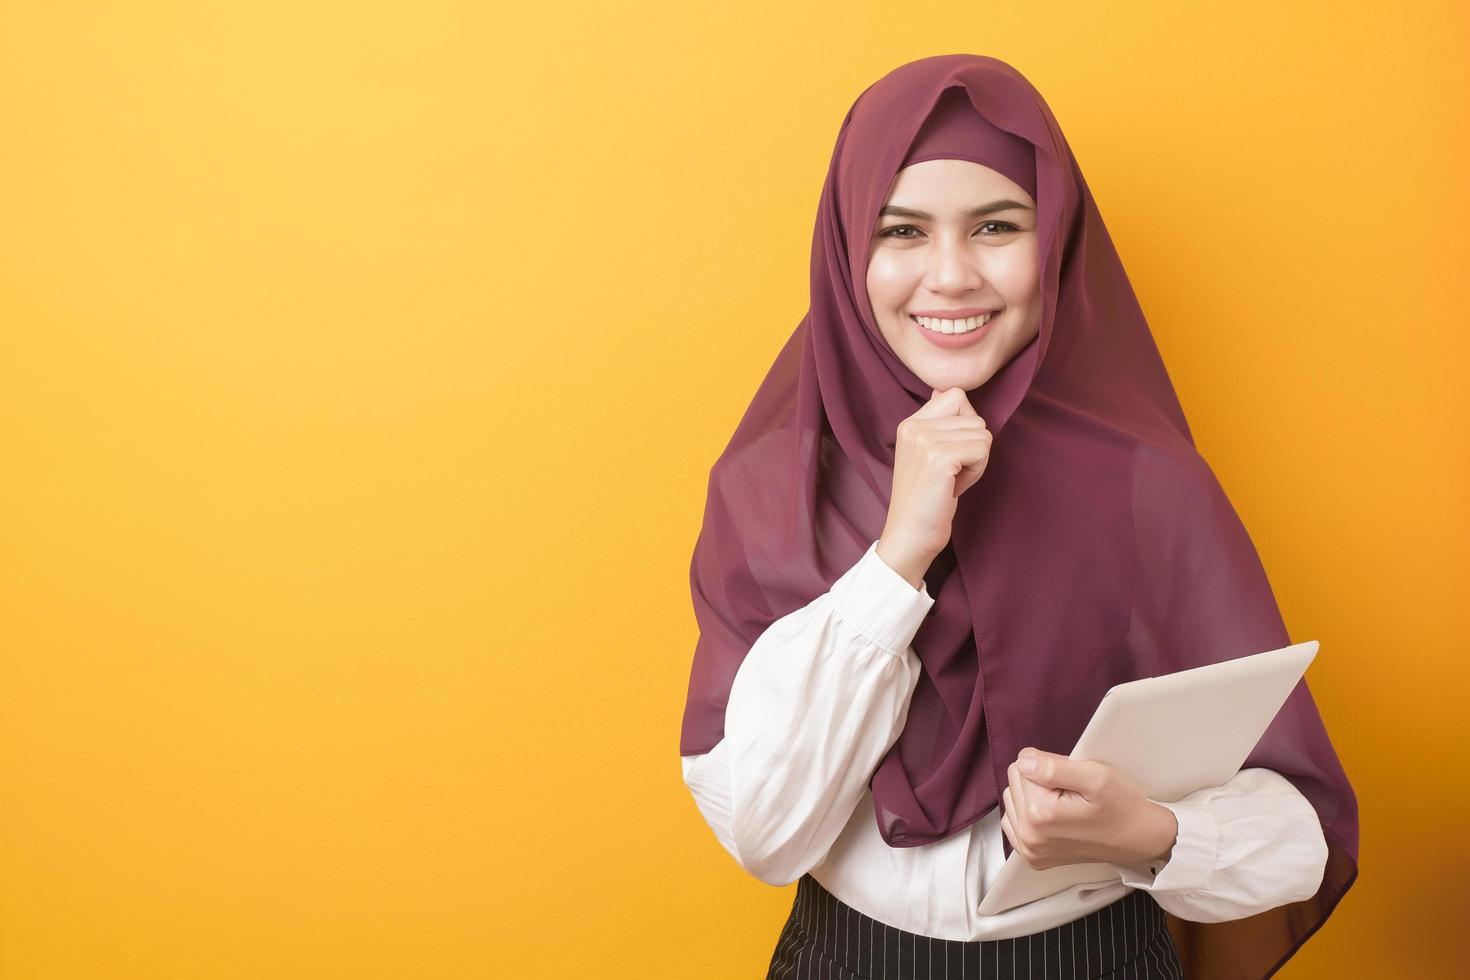 Beautiful University student with hijab portrait on yellow background photo